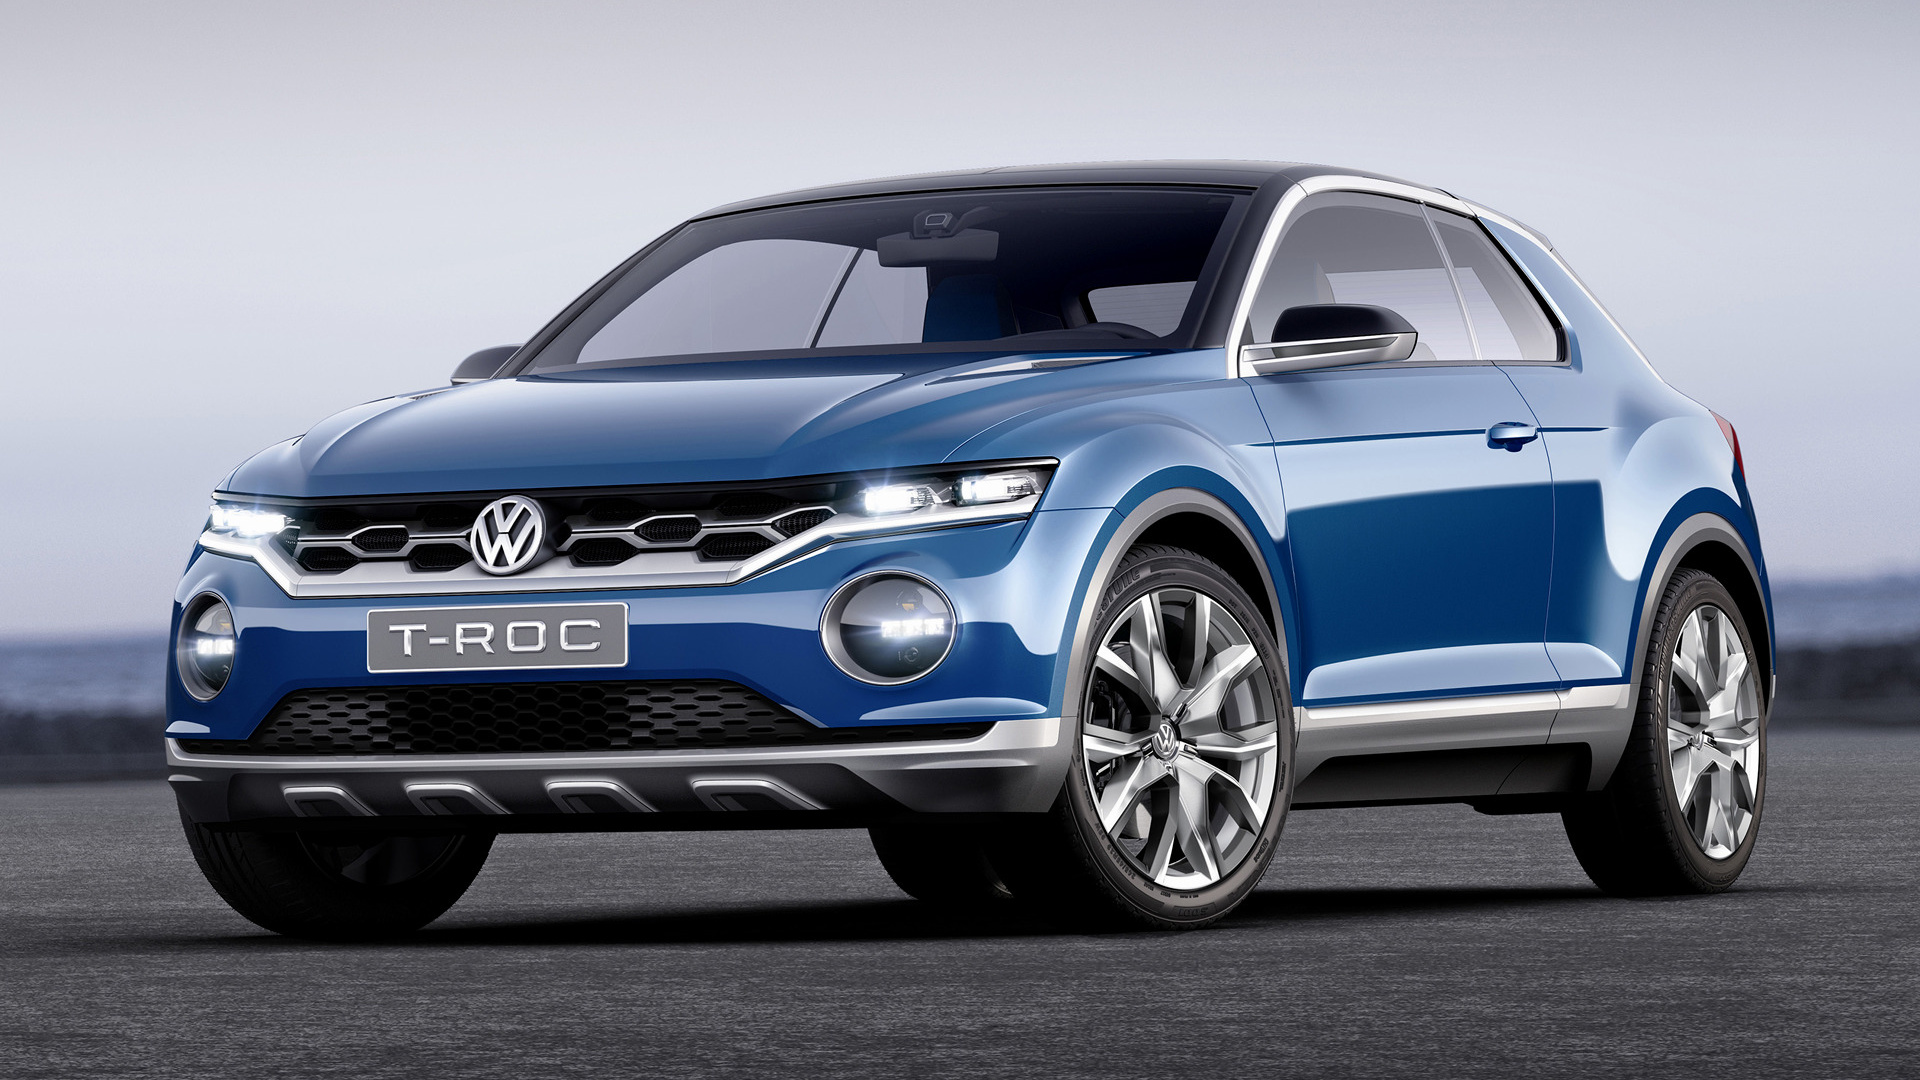 2014 Volkswagen T-Roc Concept - Wallpapers and HD Images | Car Pixel